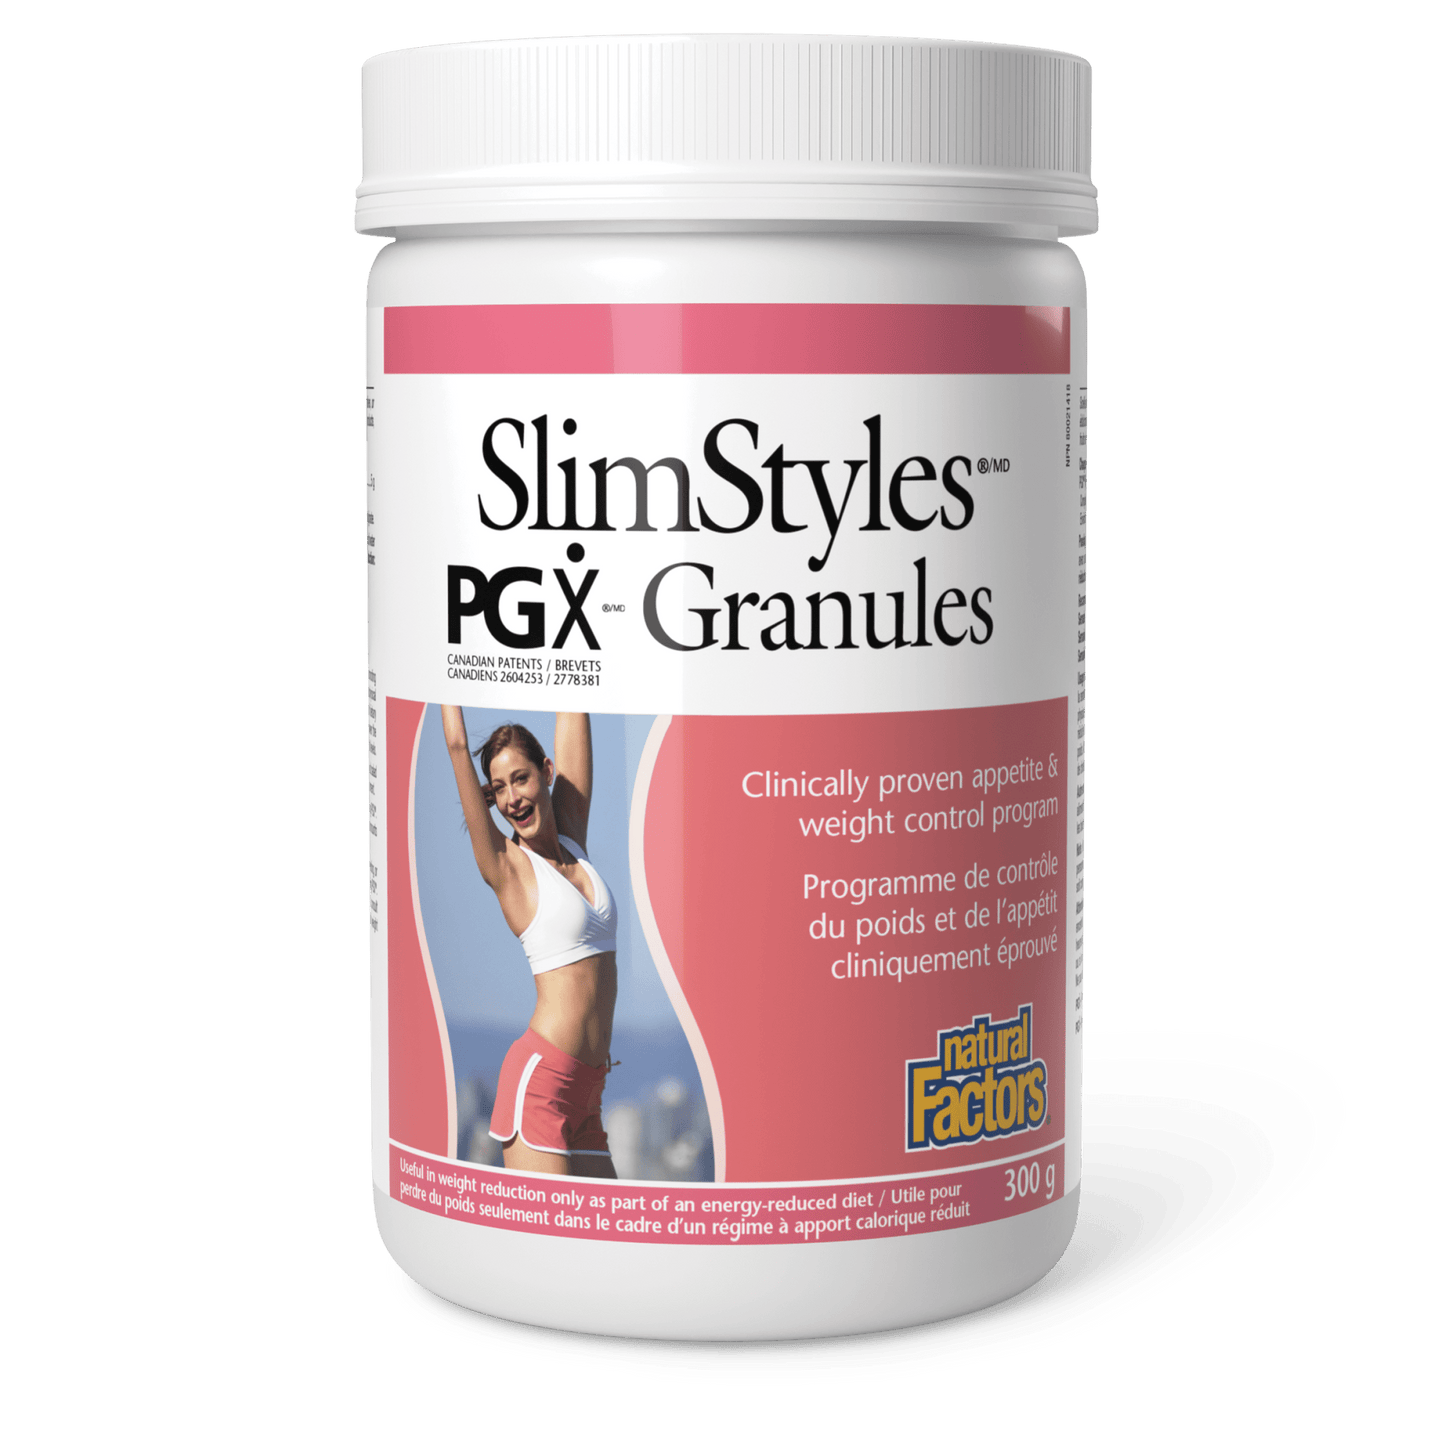 SlimStyles PGX Granules, Natural Factors|v|image|3585